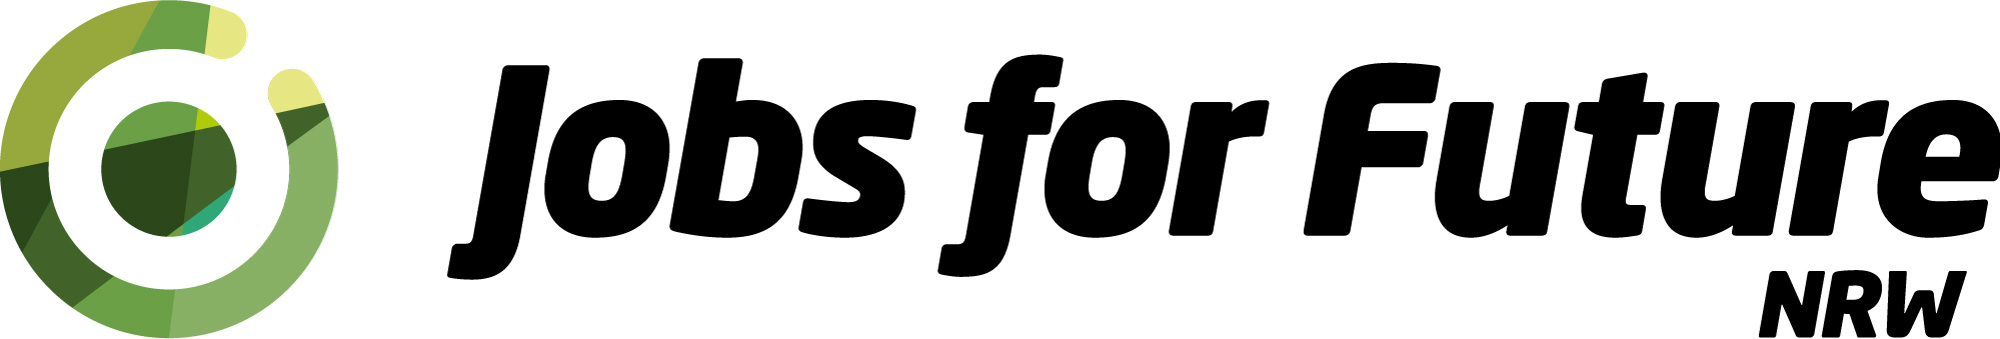 jobsforfuture nrw logo